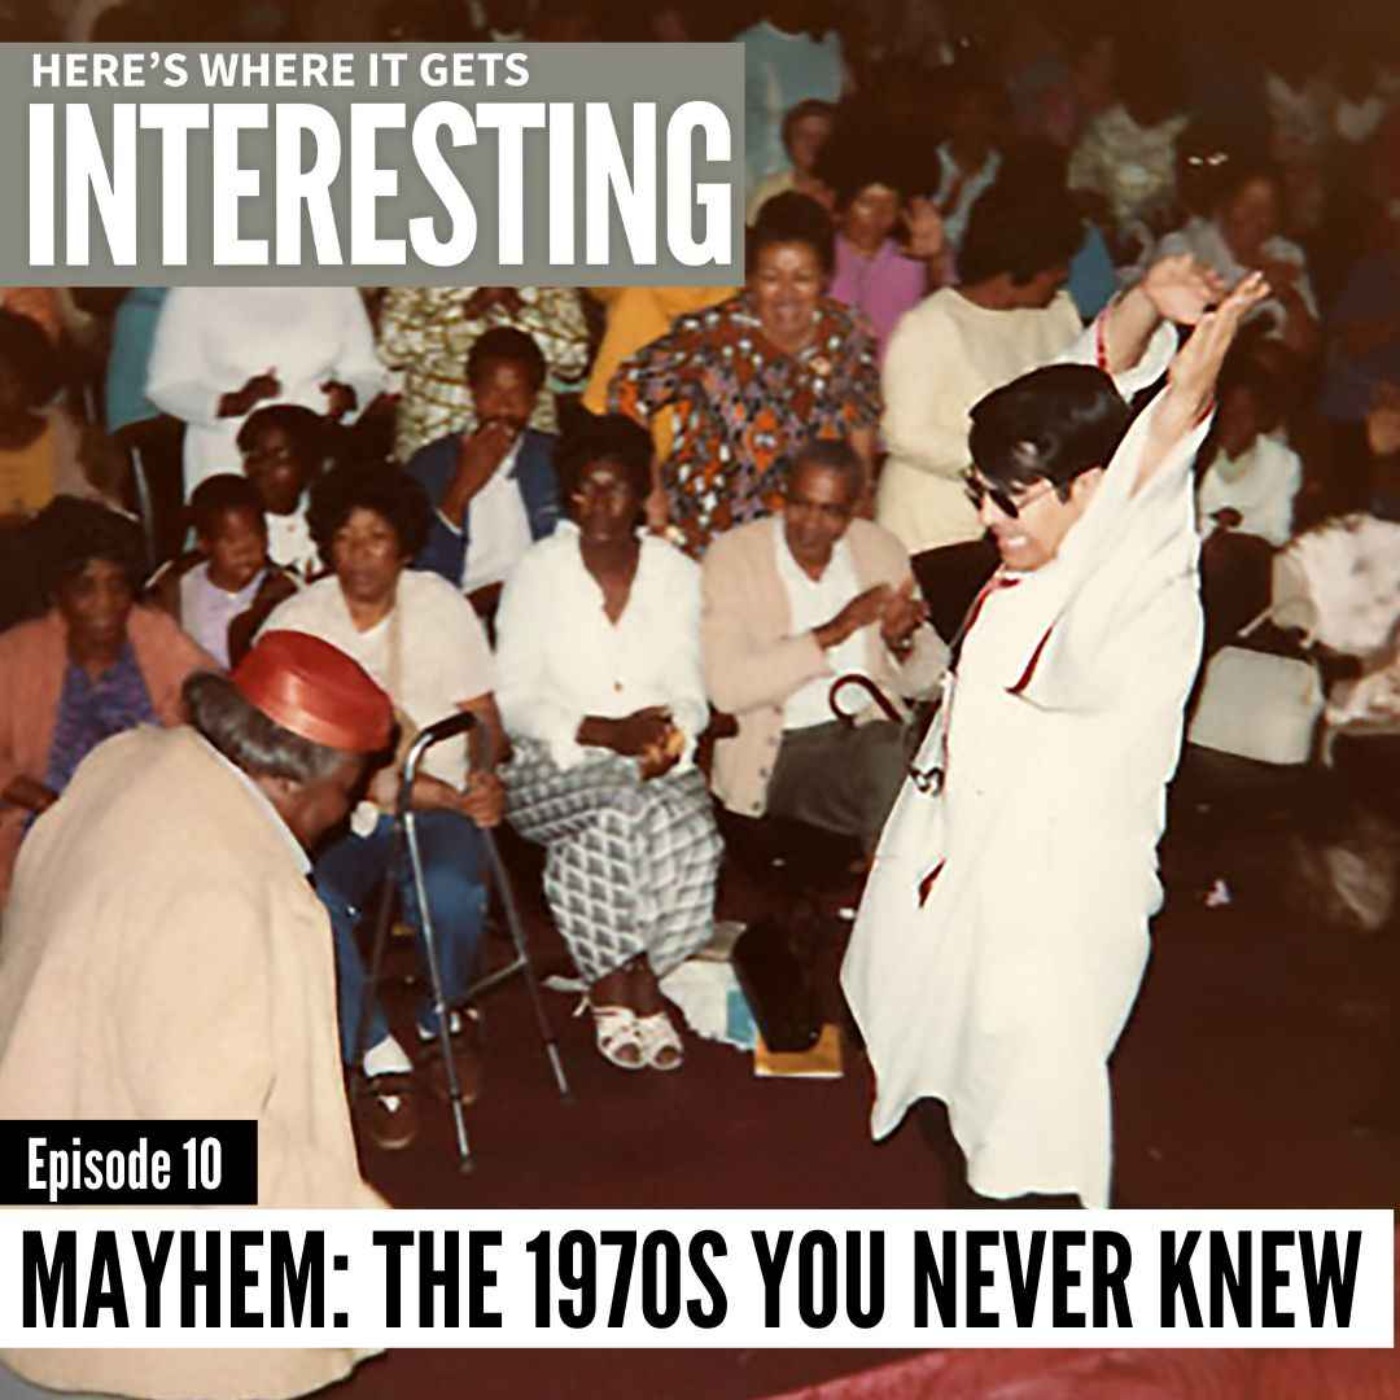 Mayhem: The 1970s You Never Knew, Episode 10